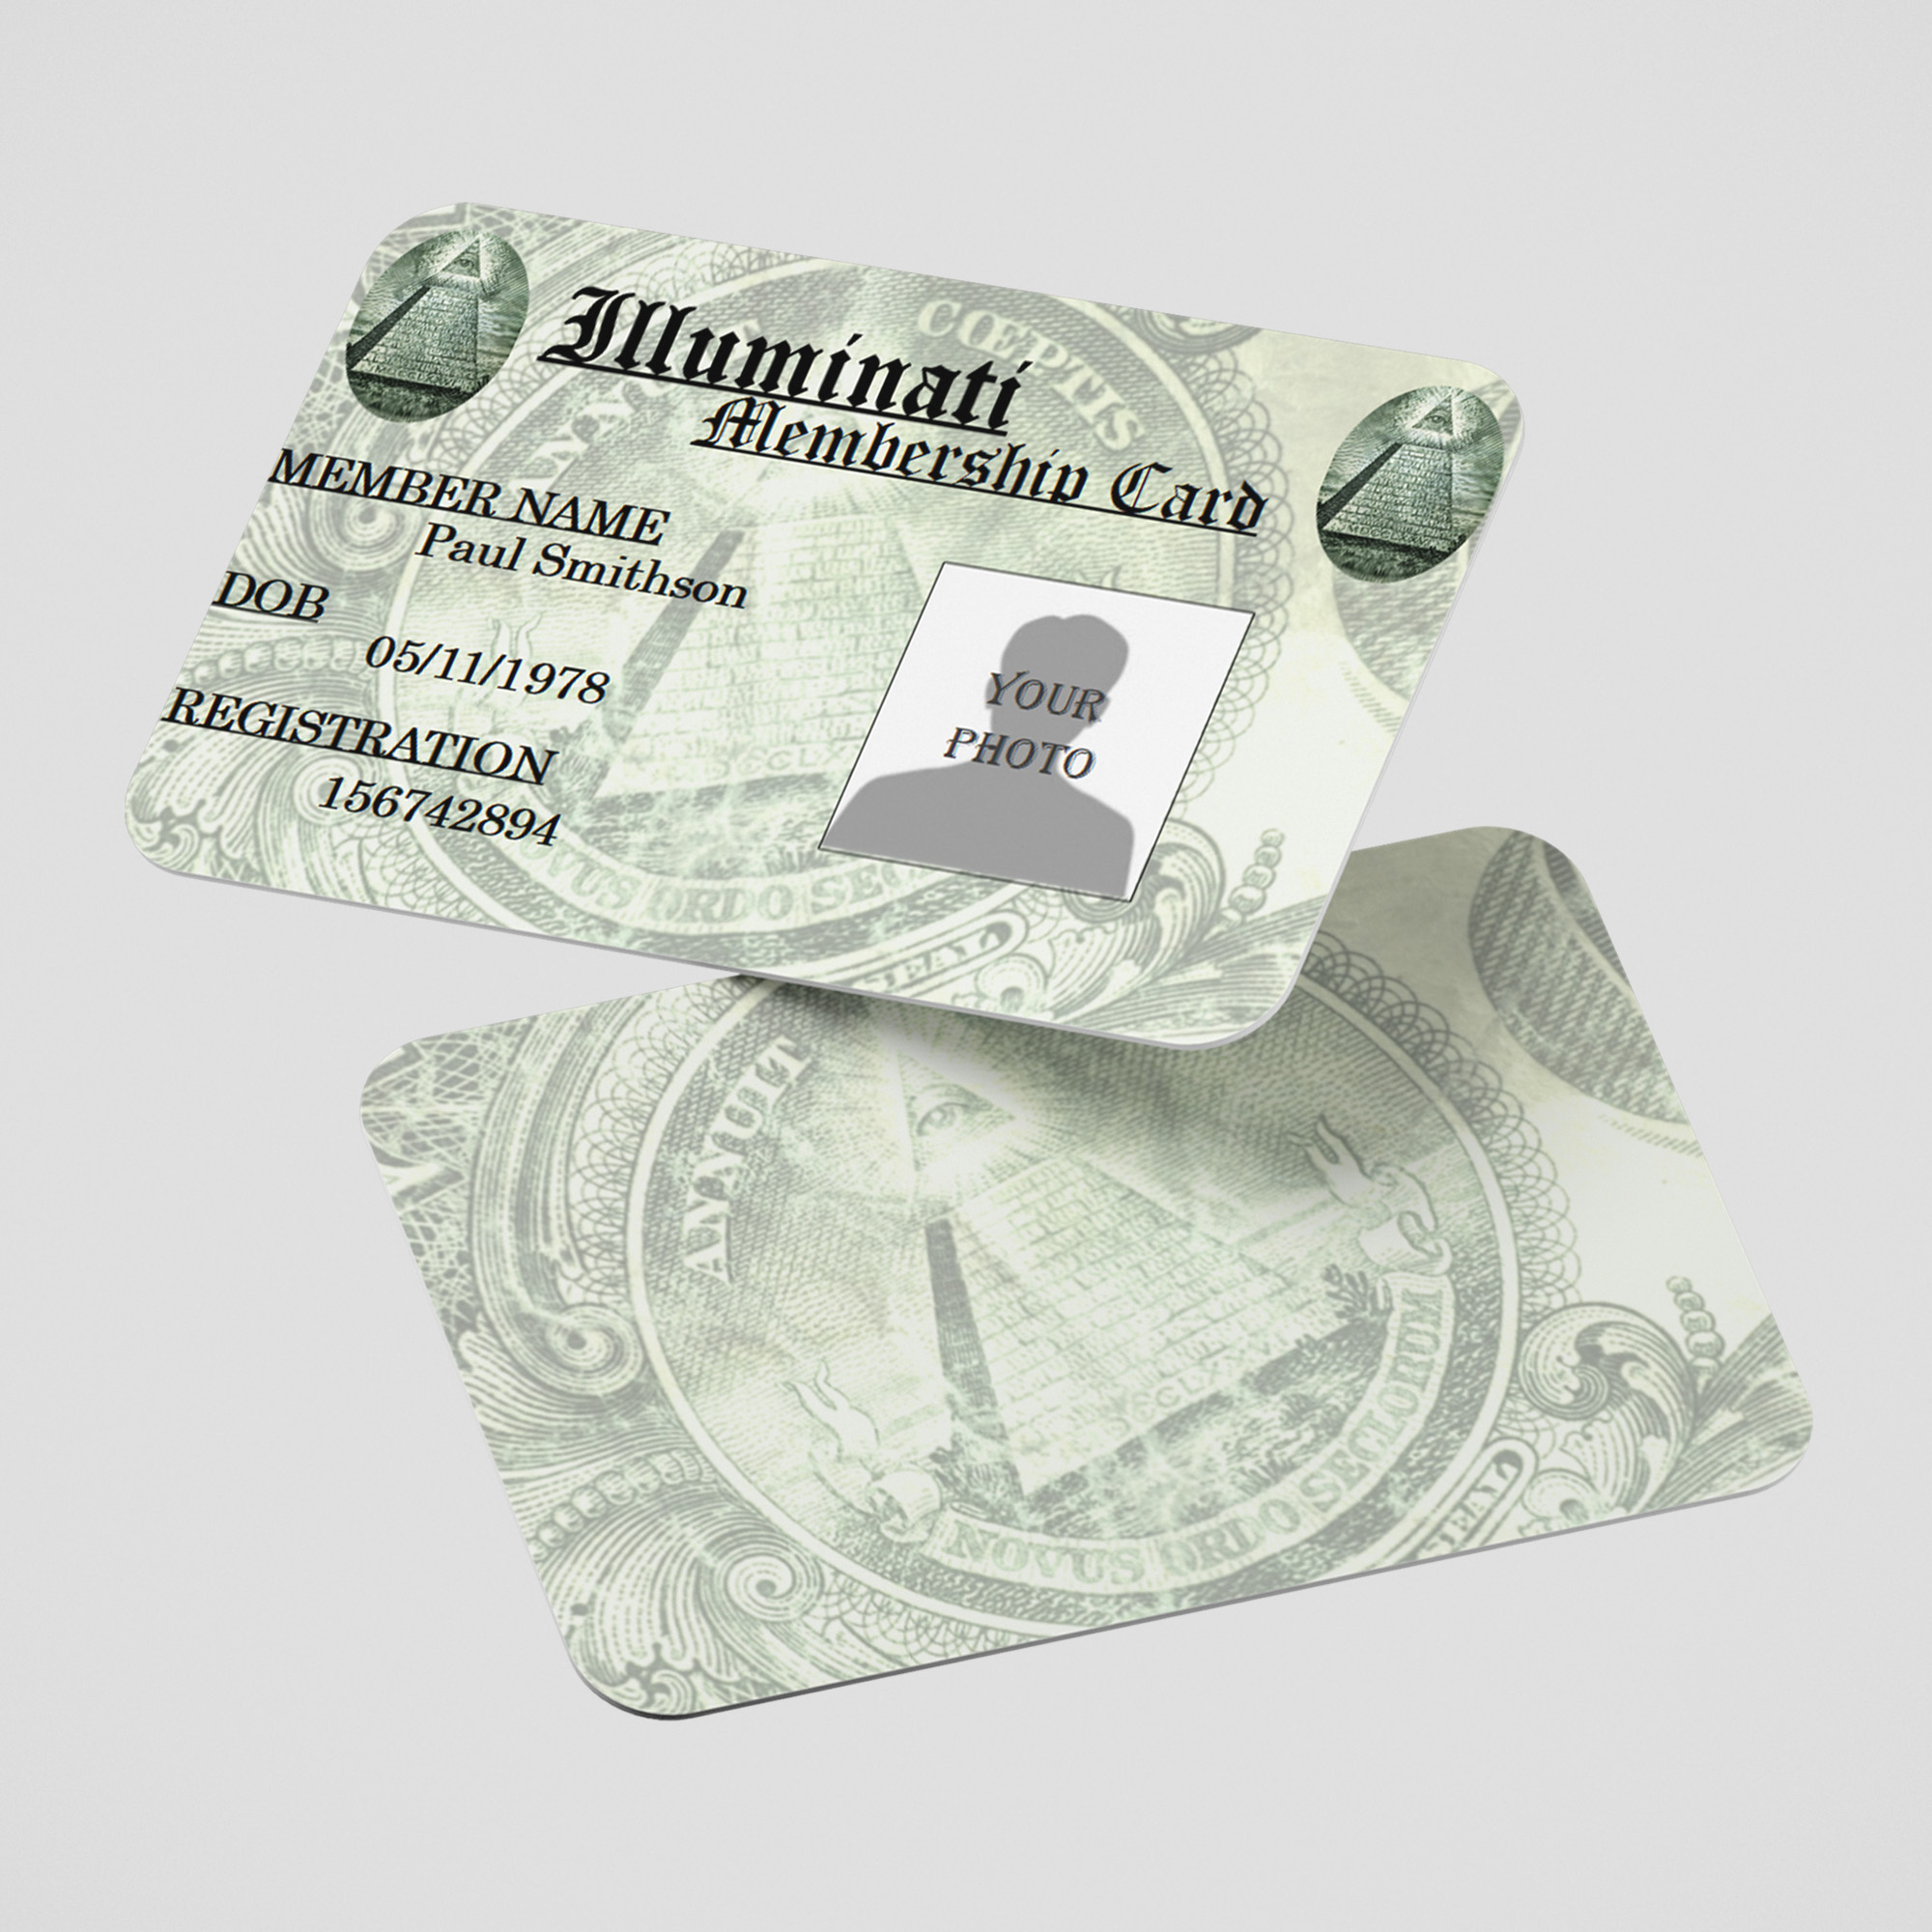 Illuminati membership card - Roleplay ID Card - Novelty gift